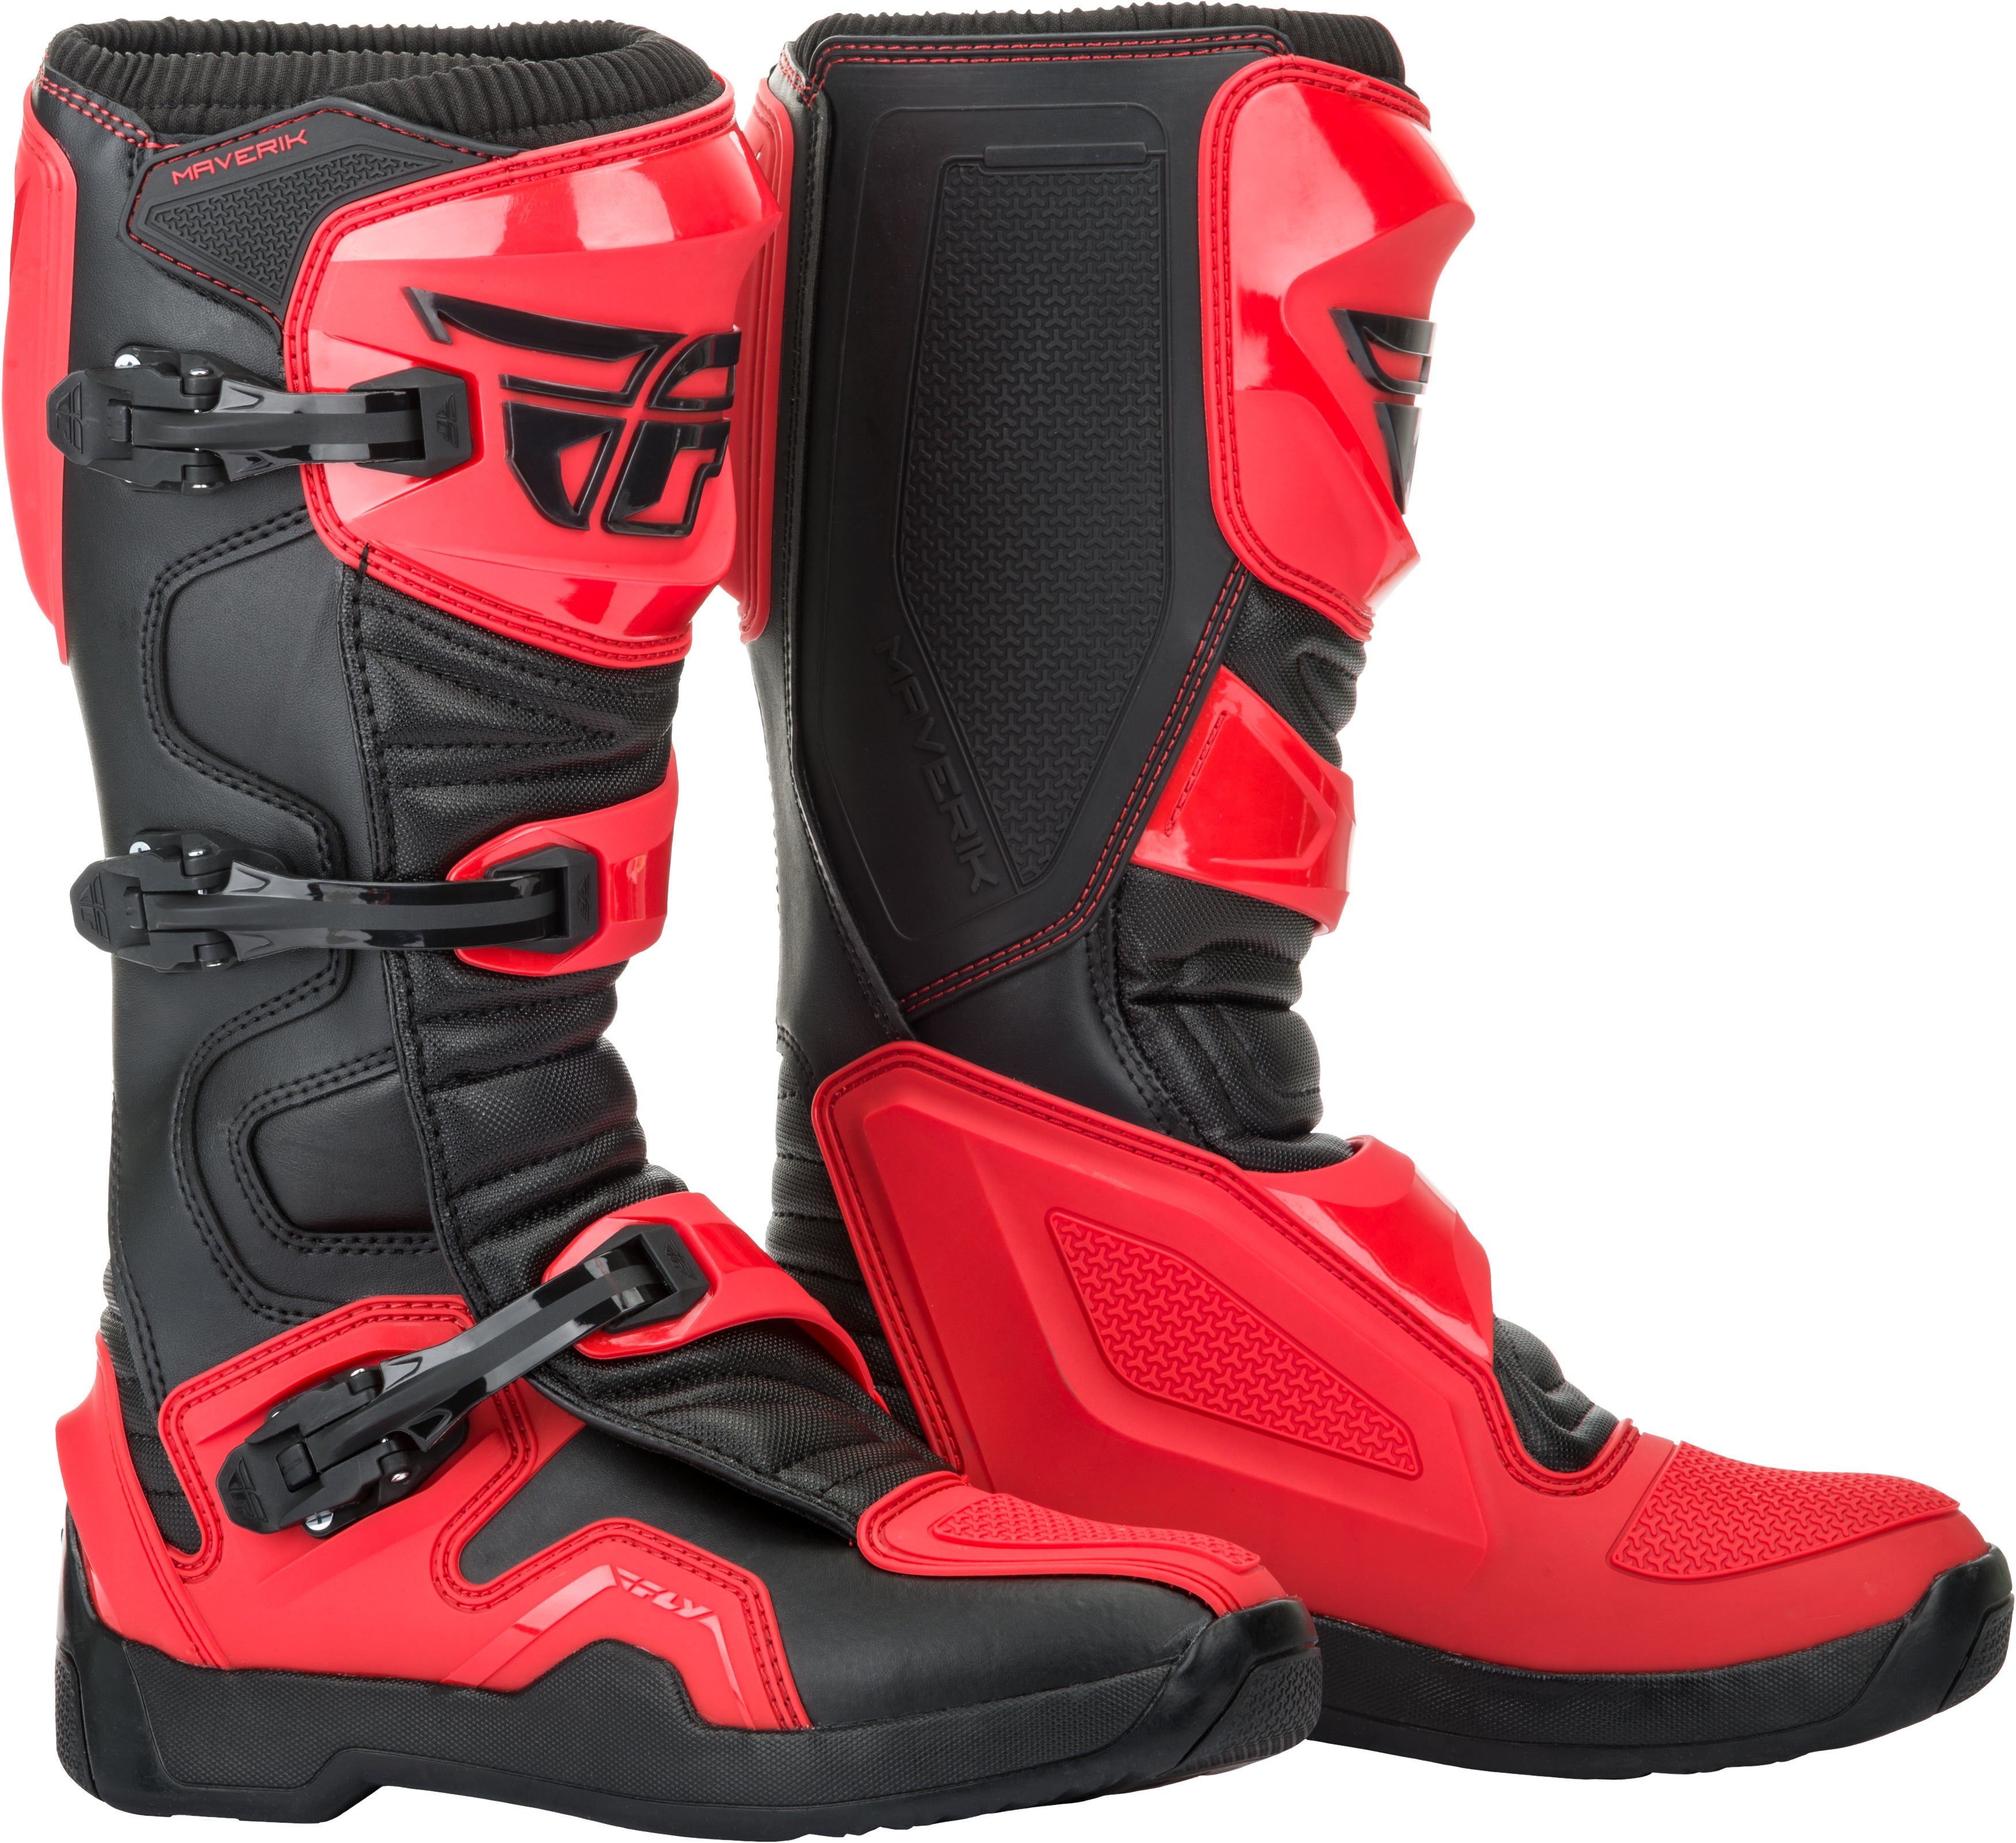 Maverik Boots Red/Black Sz 11